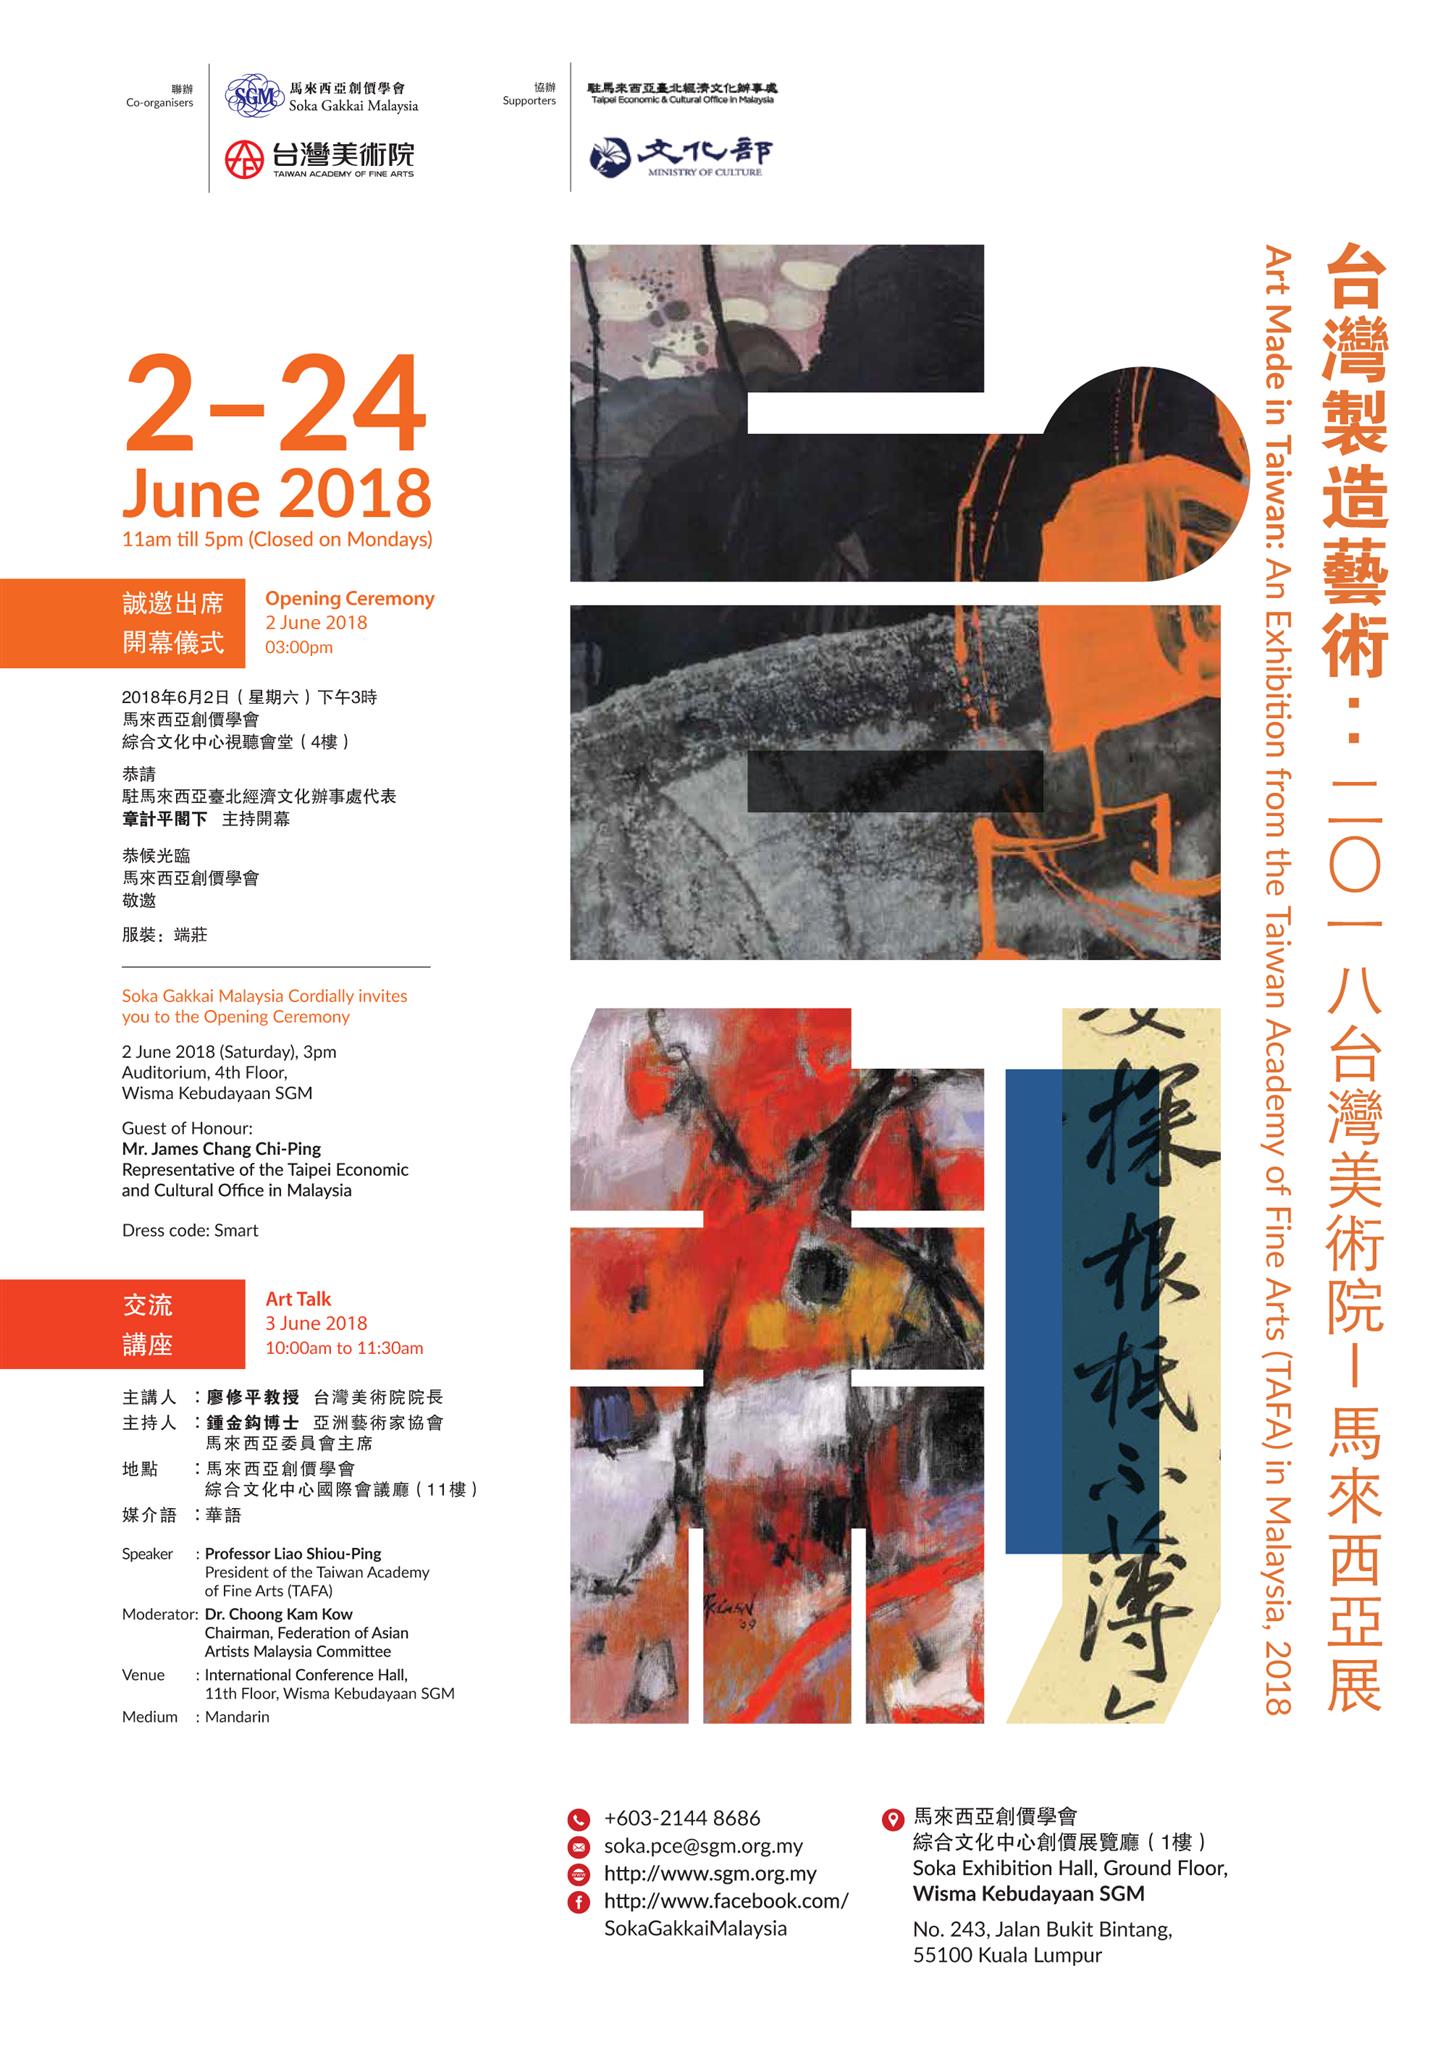 Kuala Lumpur exhibition to showcase Taiwan’s artistic diversity